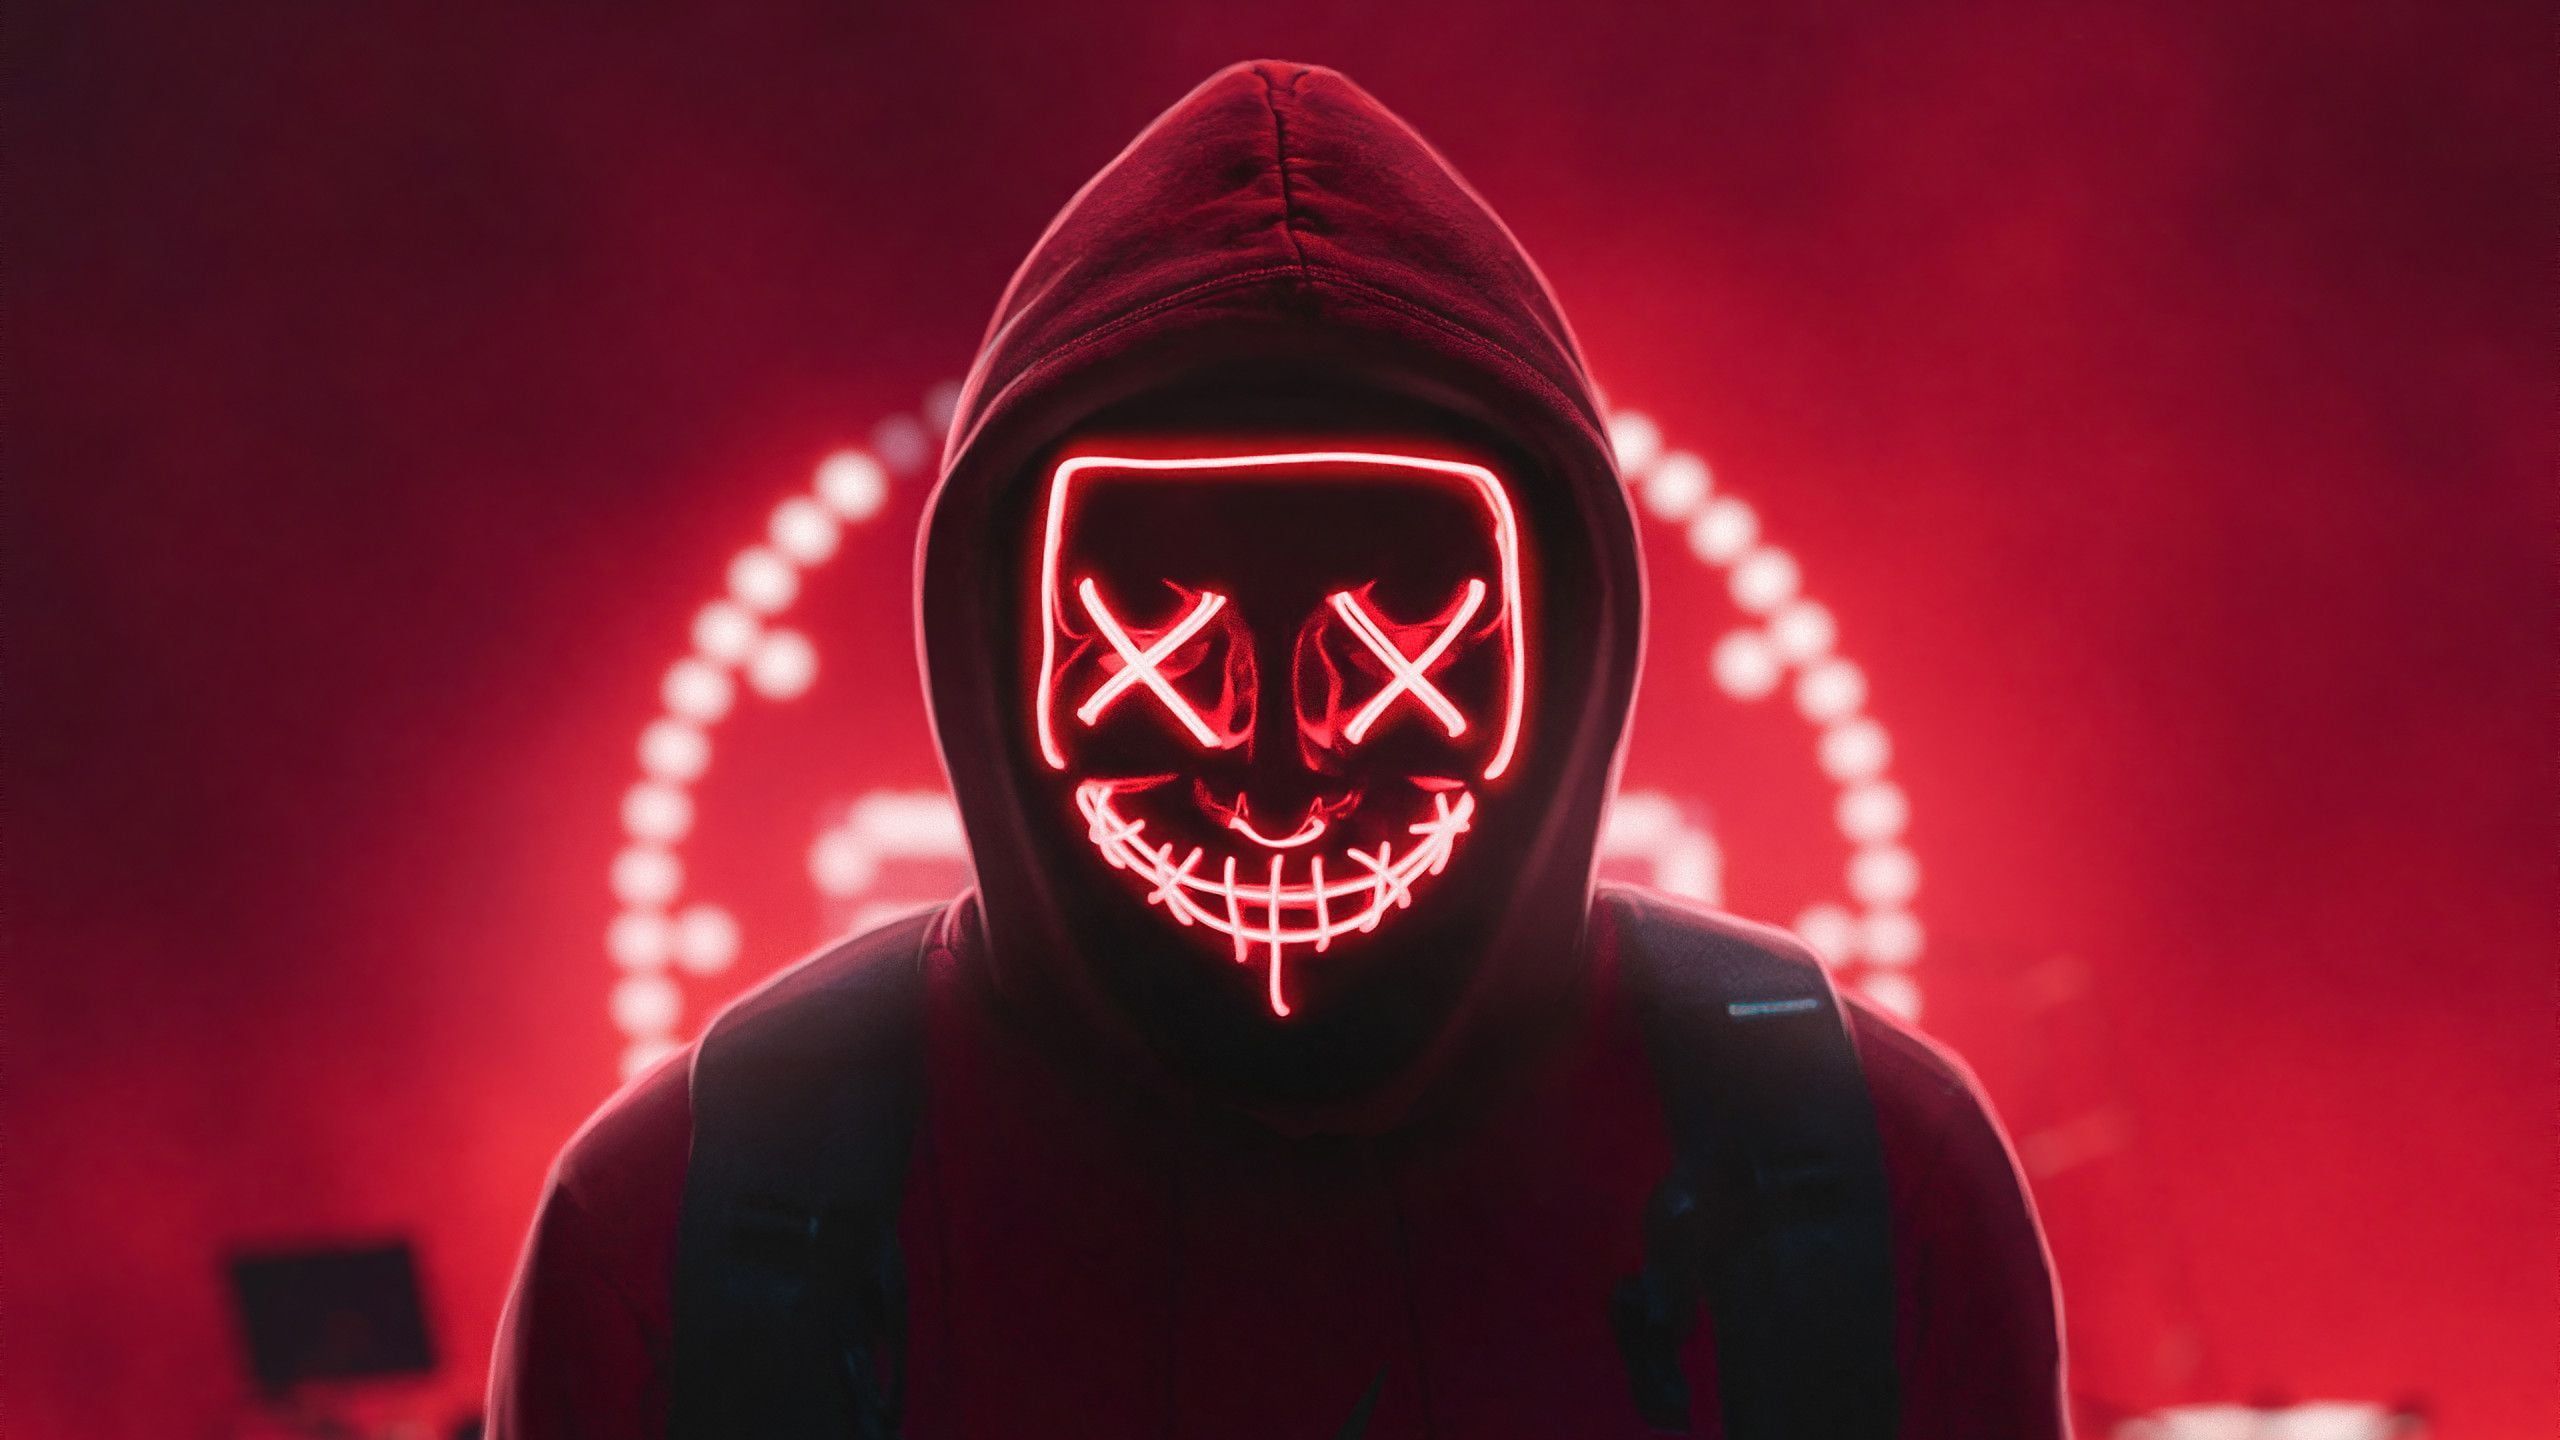 Red Neon Mask digital art #LEDs #red #neon #mask creepy eyes #creepy #Photoshop #lights #faceless #hoods #artwor. Creepy eyes, Marvel wallpaper hd, Neon wallpaper